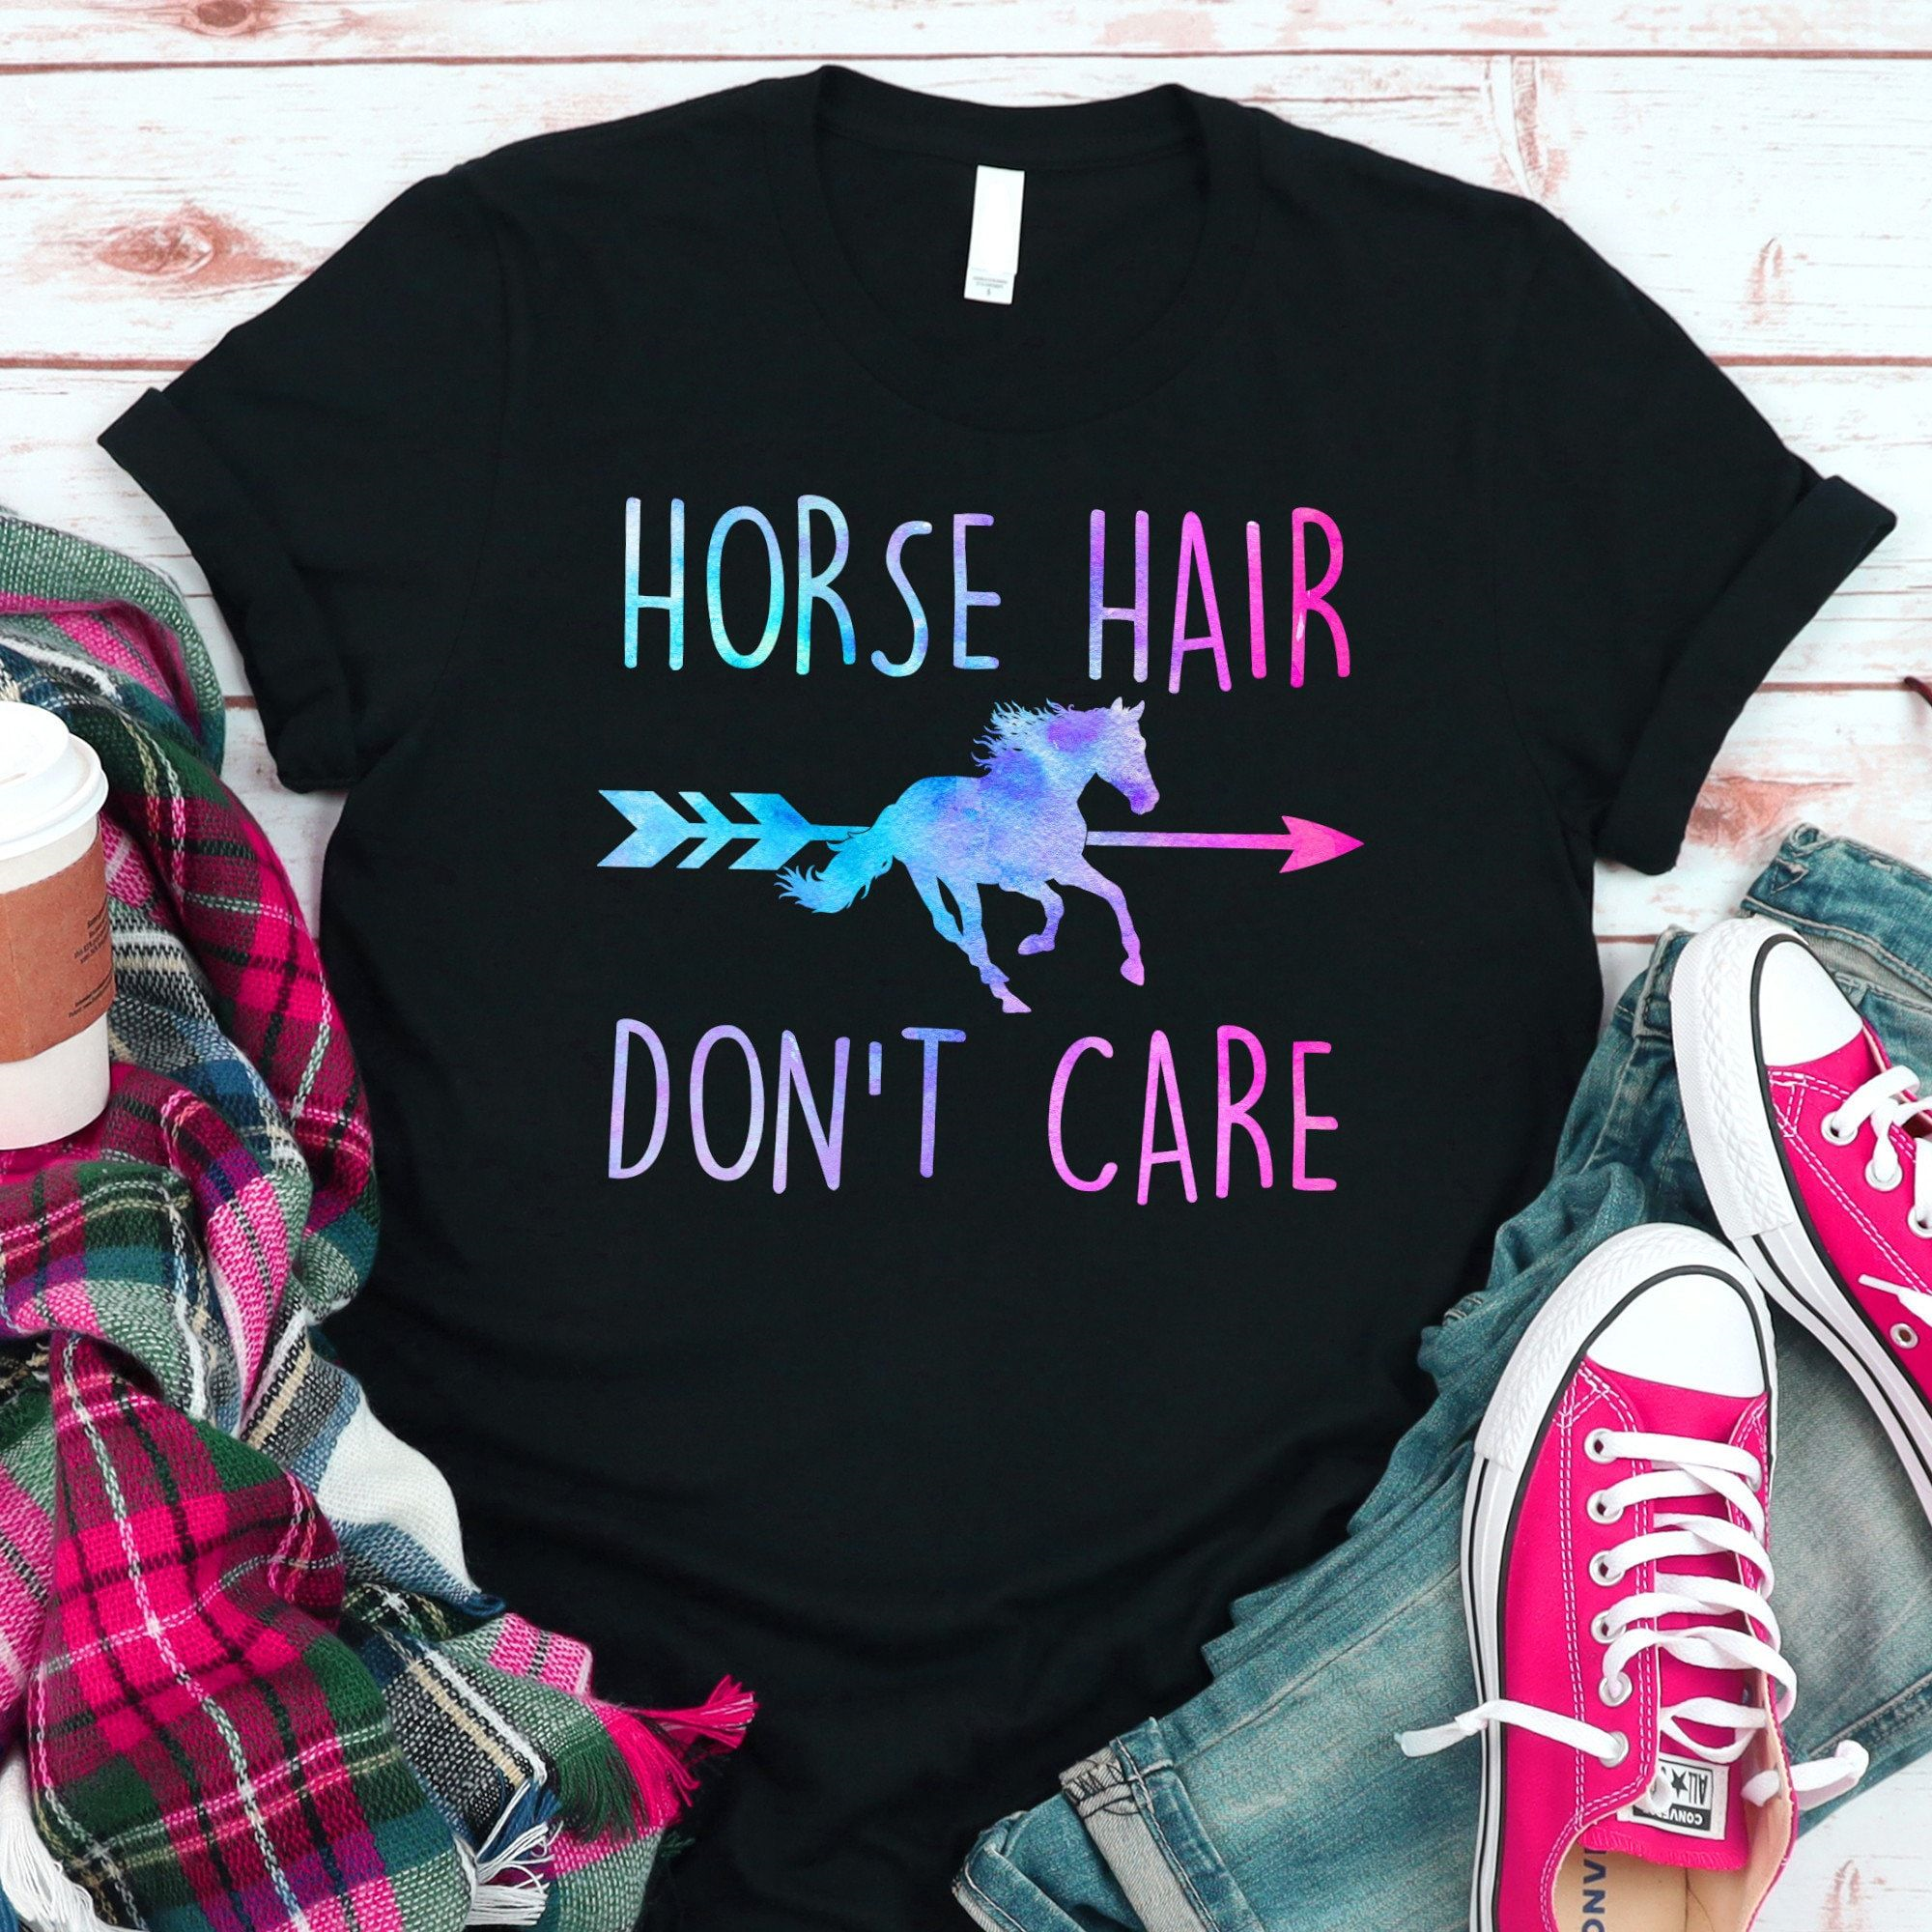 Funny Horse T-Shirt for Women Teen Girls_ HORSE Hair DONT Care, Funny Gift for Horse Lover Equestrian Horseback Rider, Funny Horse Tee Shirt unisex T-Shirt Long Sleeve T-Shirt  Hoodie Sweatshirt